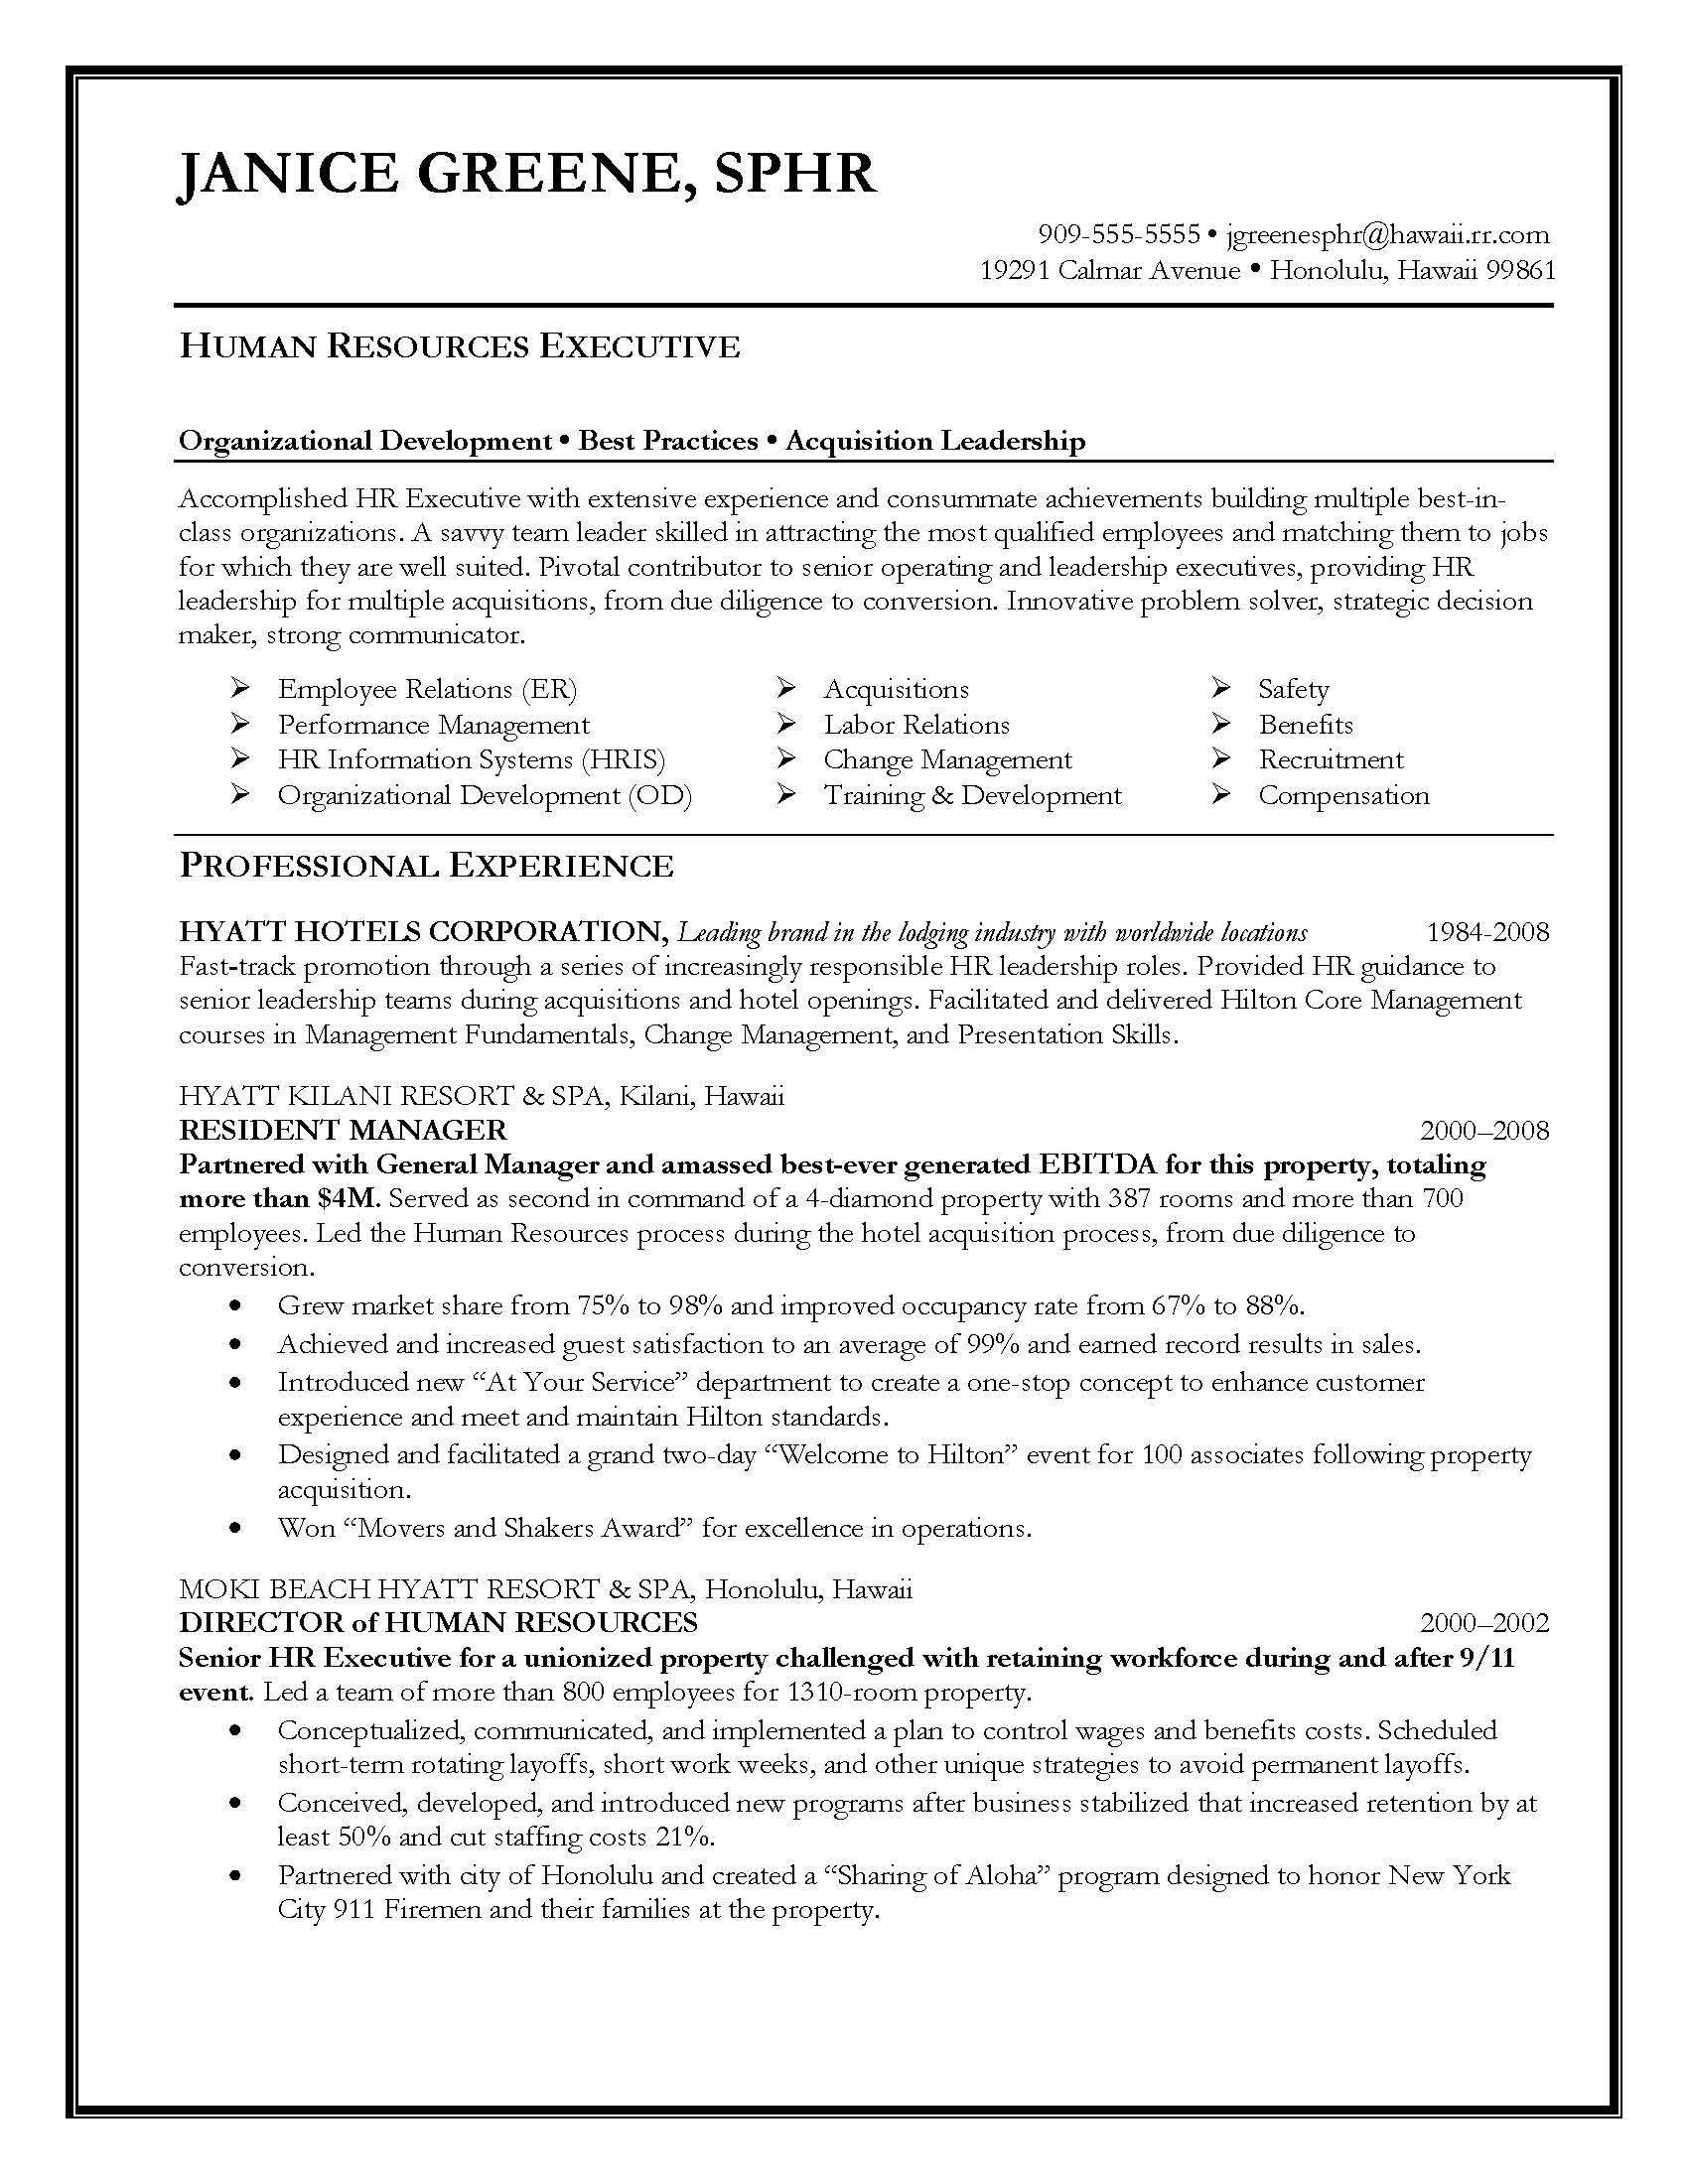 Professional Resume Writers Alluring Resume Companies In Atlanta Ga For Professional Resume Writers Atlanta Of Resume Companies In Atlanta Ga professional resume writers|wikiresume.com